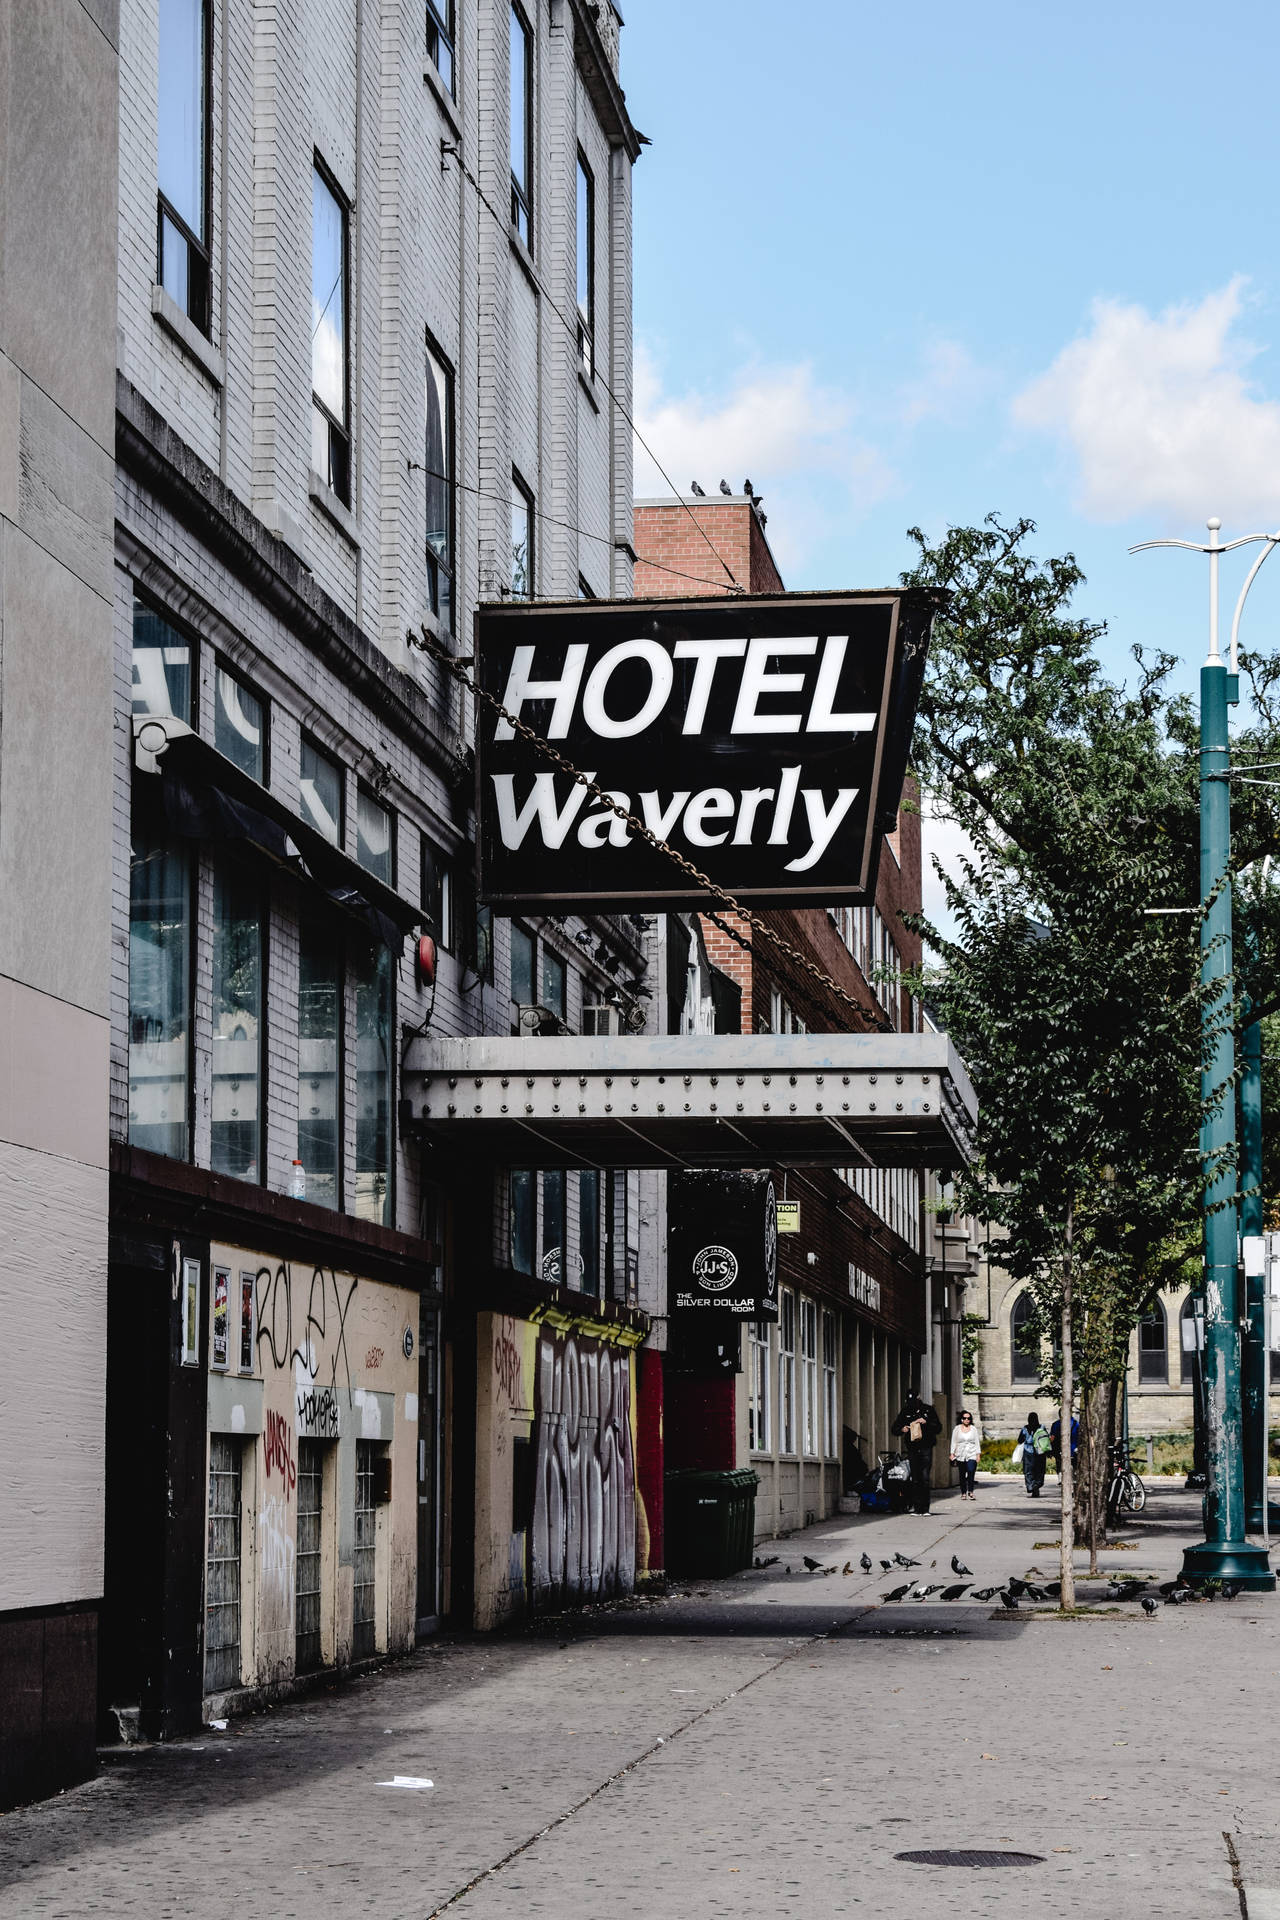 Hotel Waverly Signatur Grøn Tapet: Et højkvalitets tapet med subtile, vilde skove og livlige farver. Wallpaper